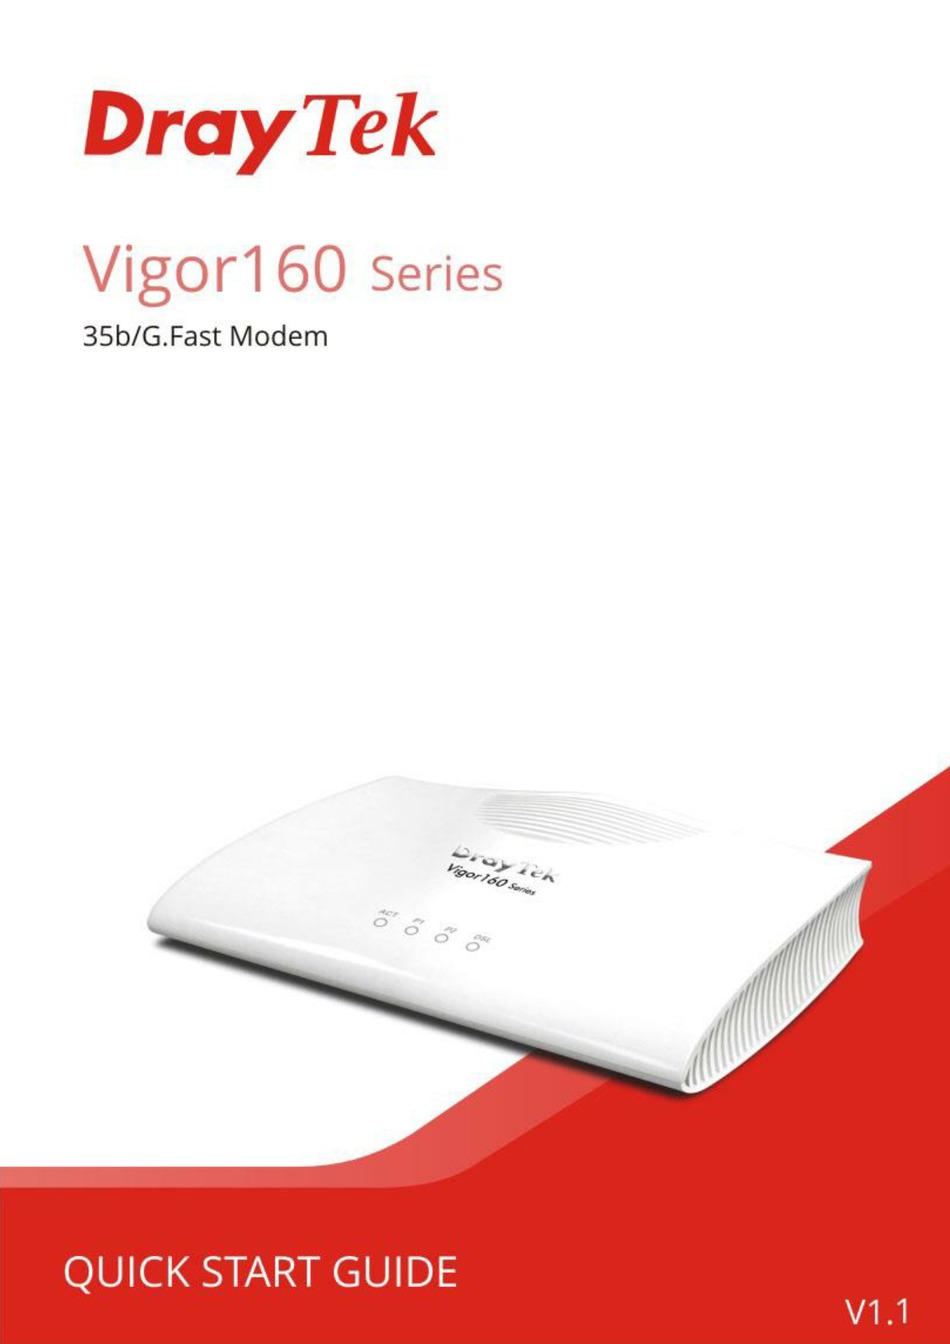 DRAYTEK VIGOR 160 SERIES QUICK START MANUAL Pdf Download | ManualsLib